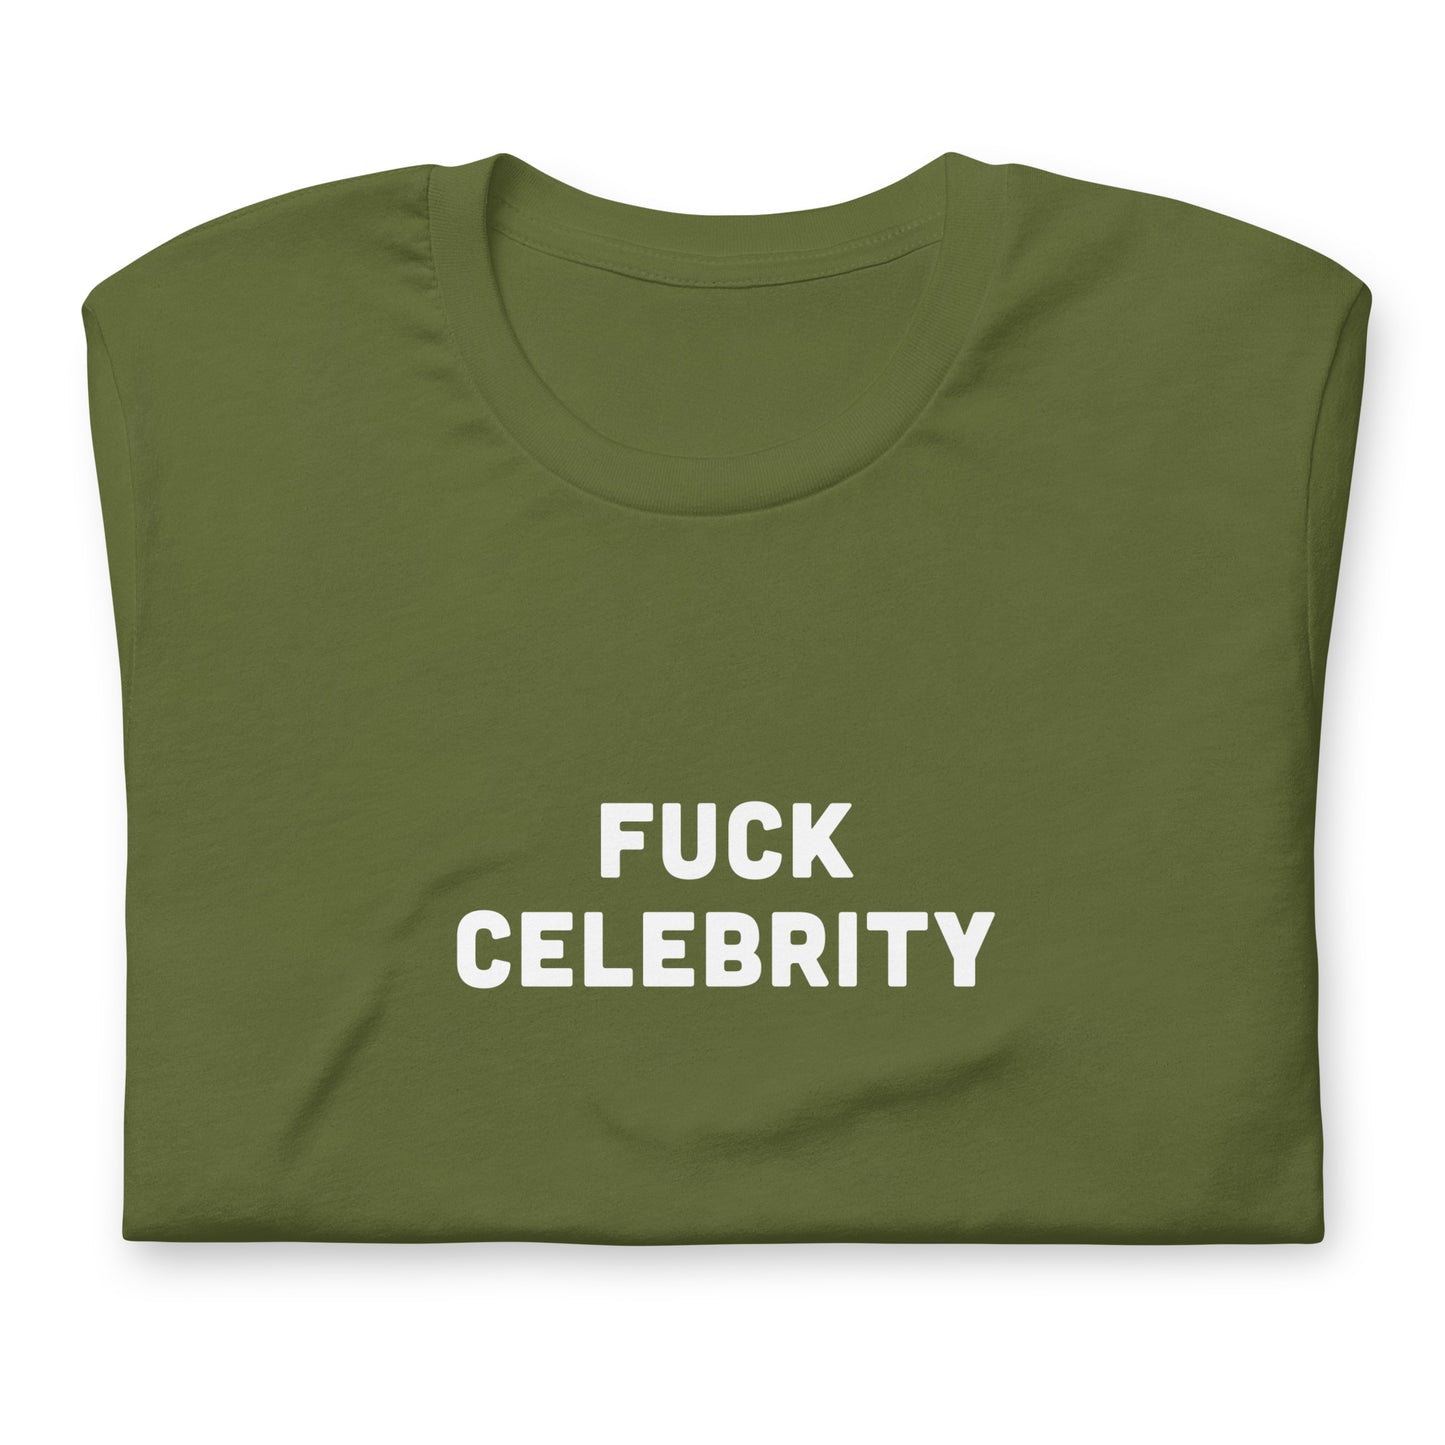 Fuck Celebrity T-Shirt Size S Color Navy